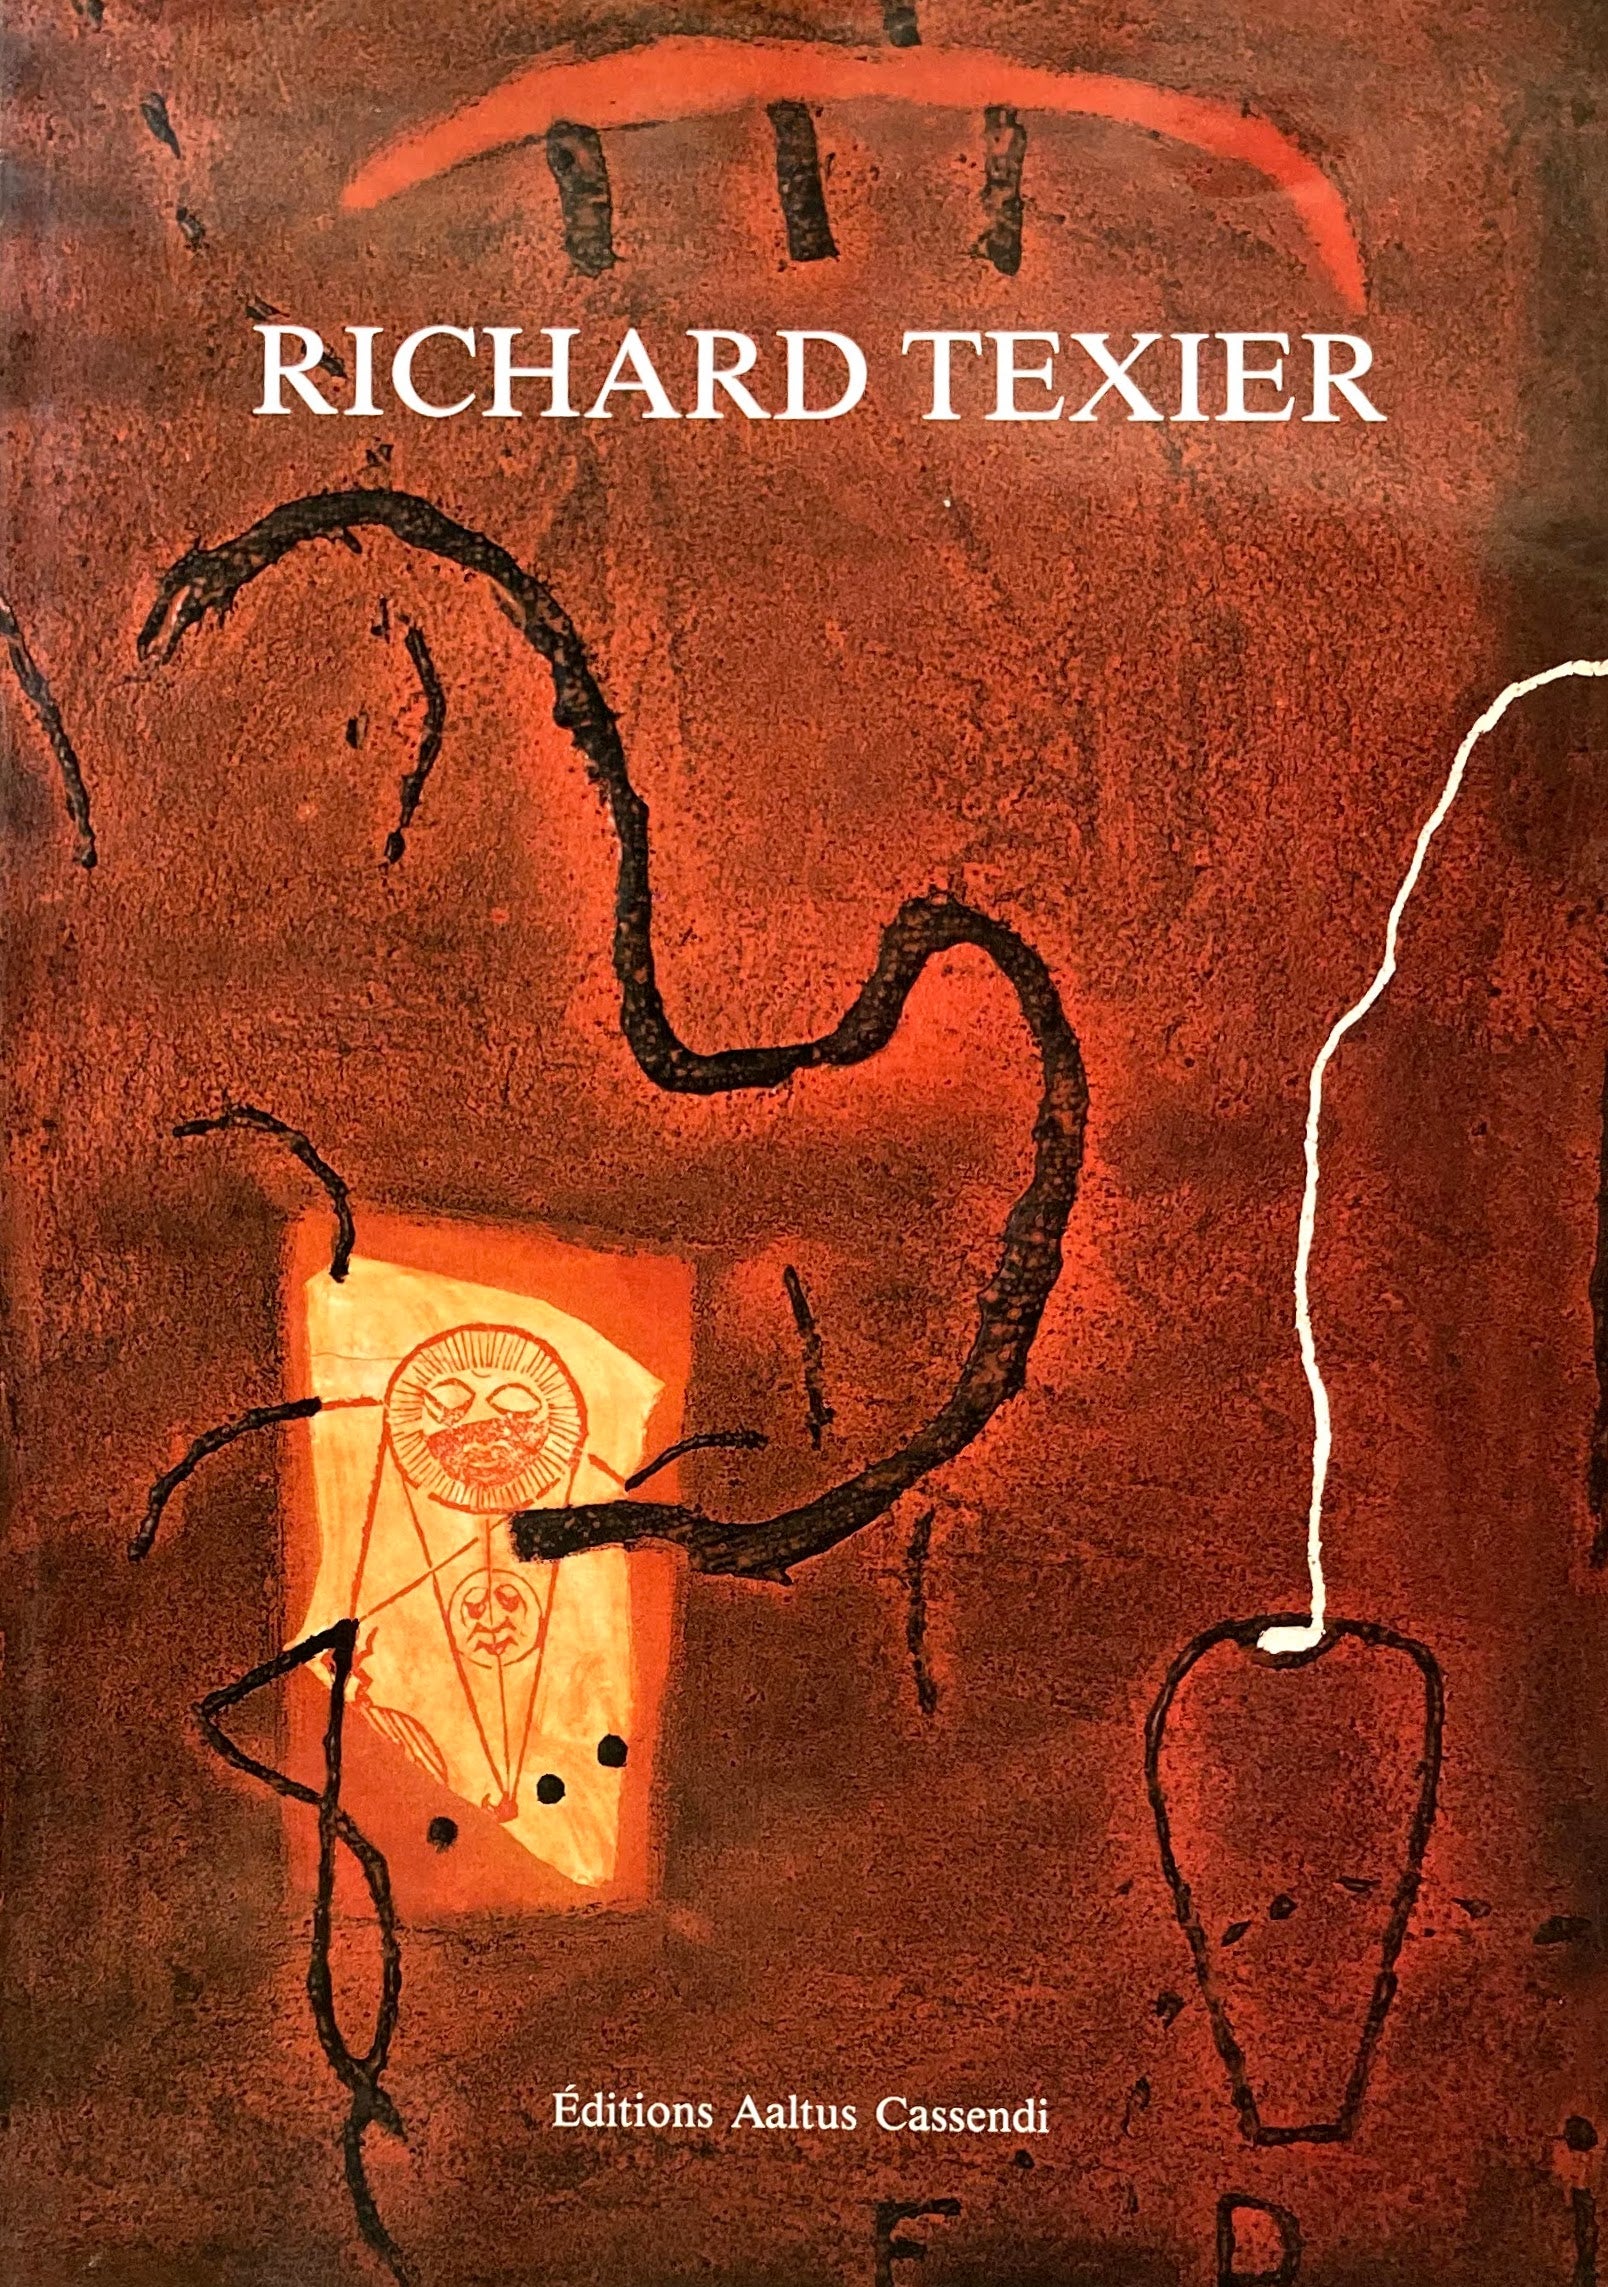 RICHARD TEXIER 1990 リチャード・テキシエ – smokebooks shop